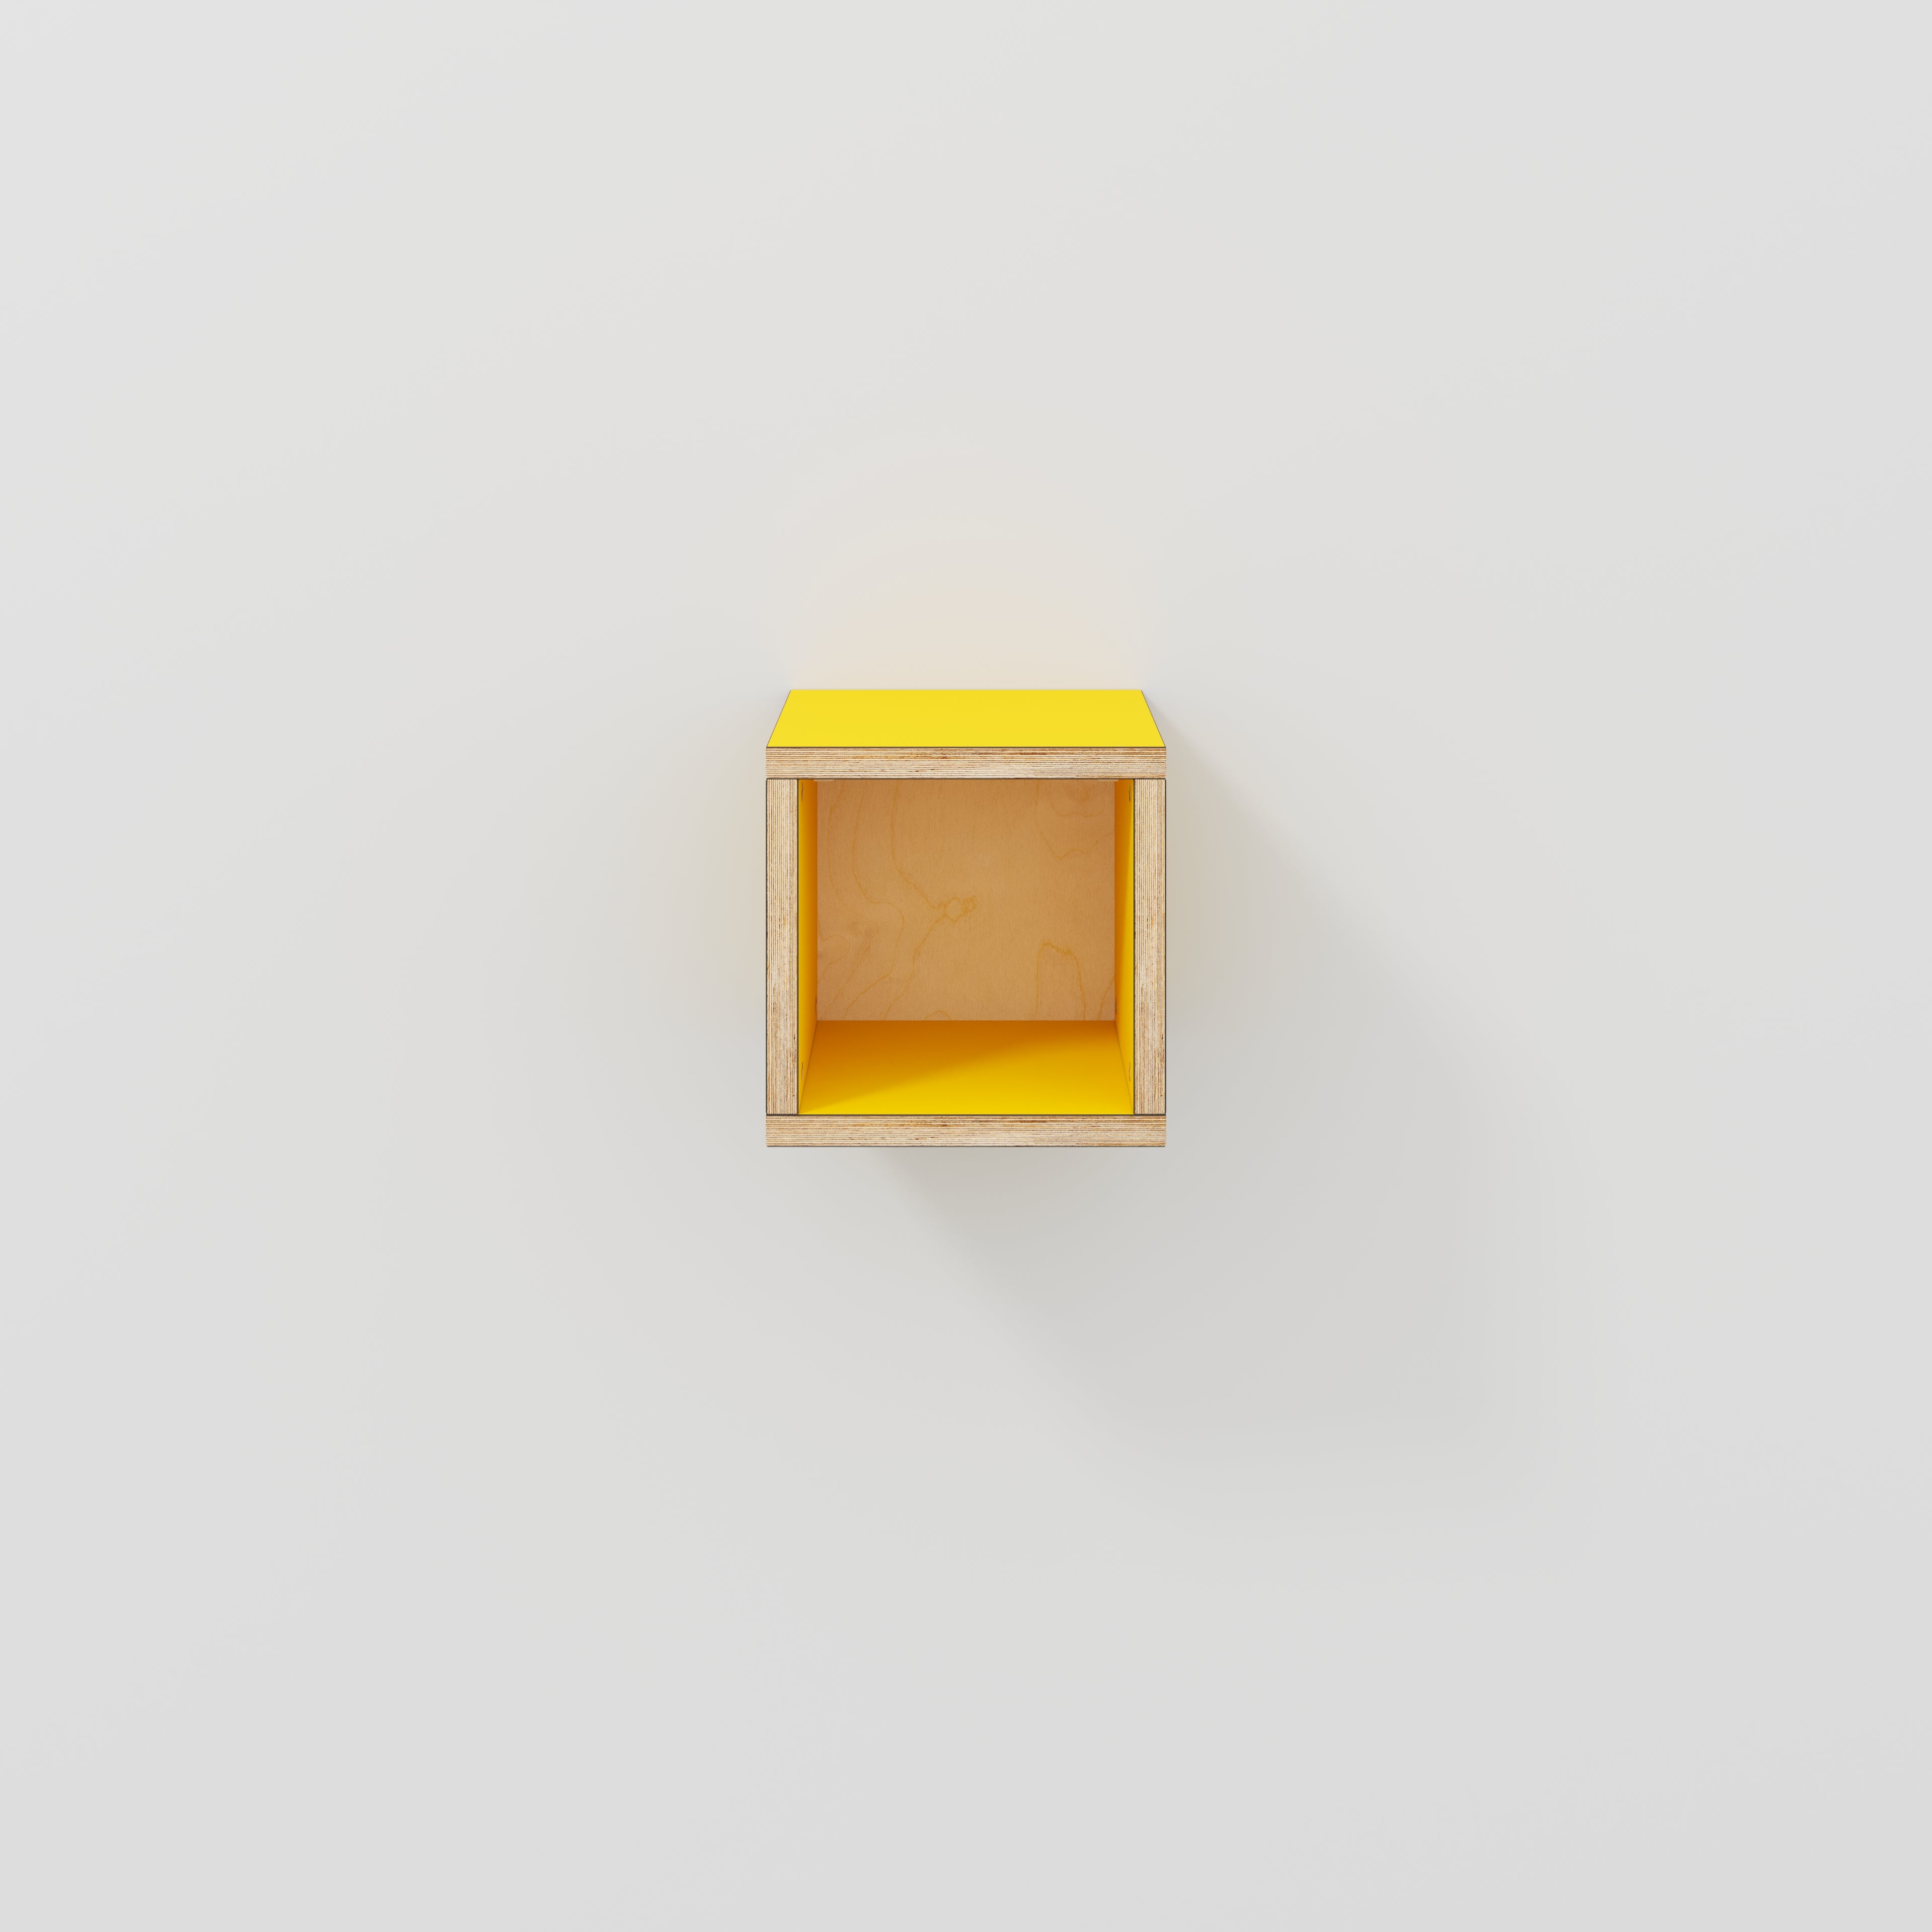 Wall Hung Box Storage - Formica Chrome Yellow - 300(w) x 300(d) x 300(h)